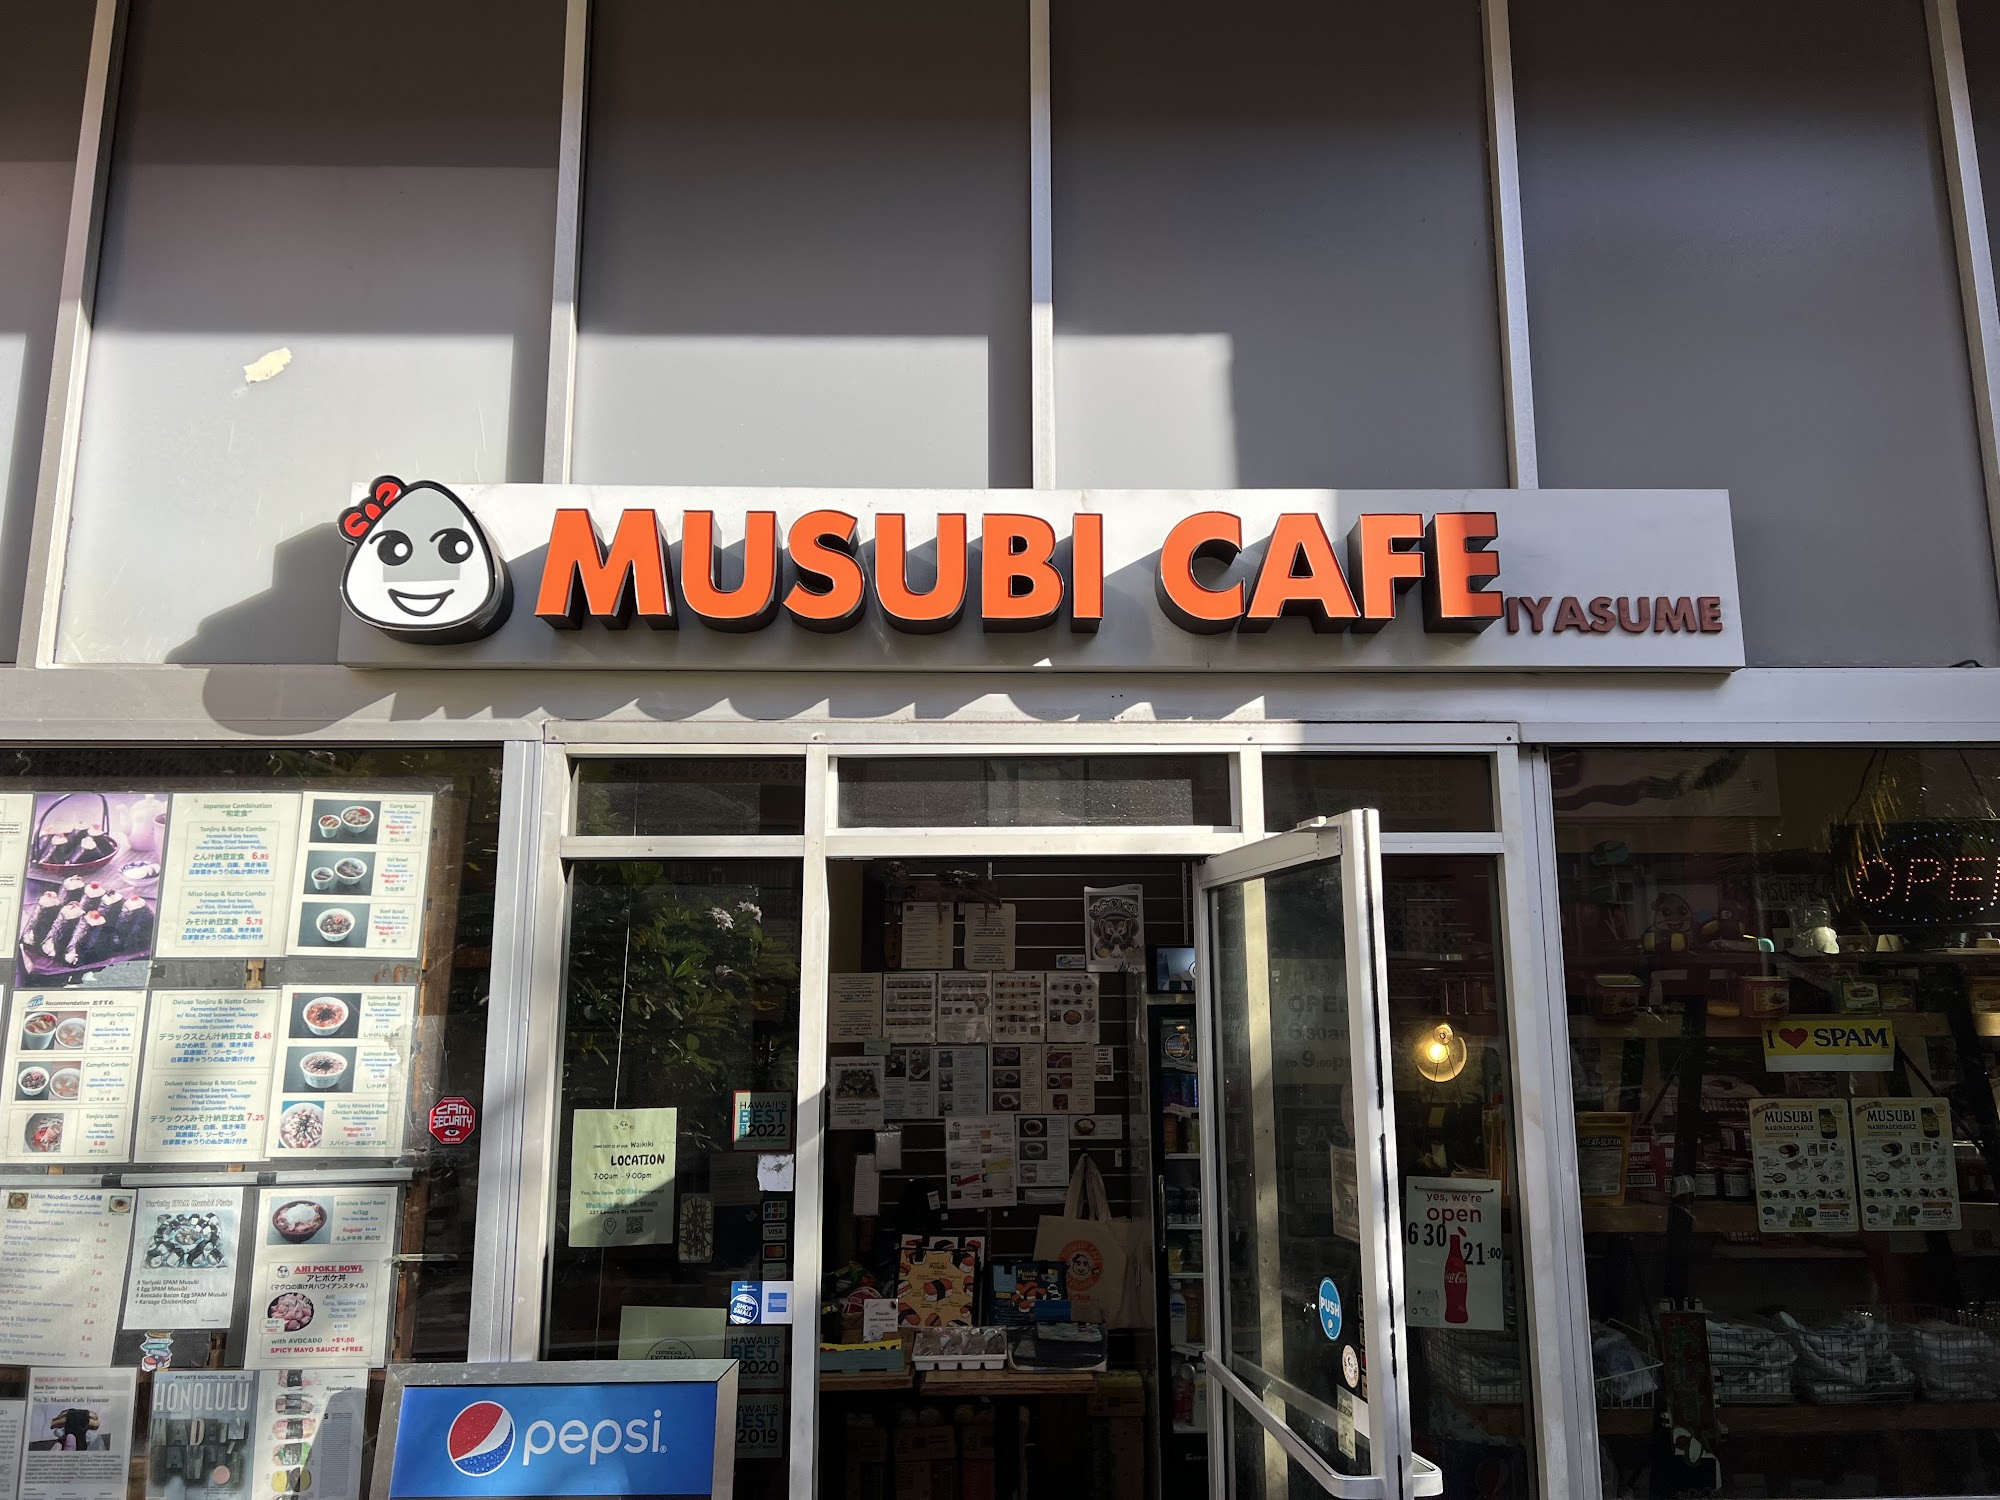 Musubi Cafe IYASUME